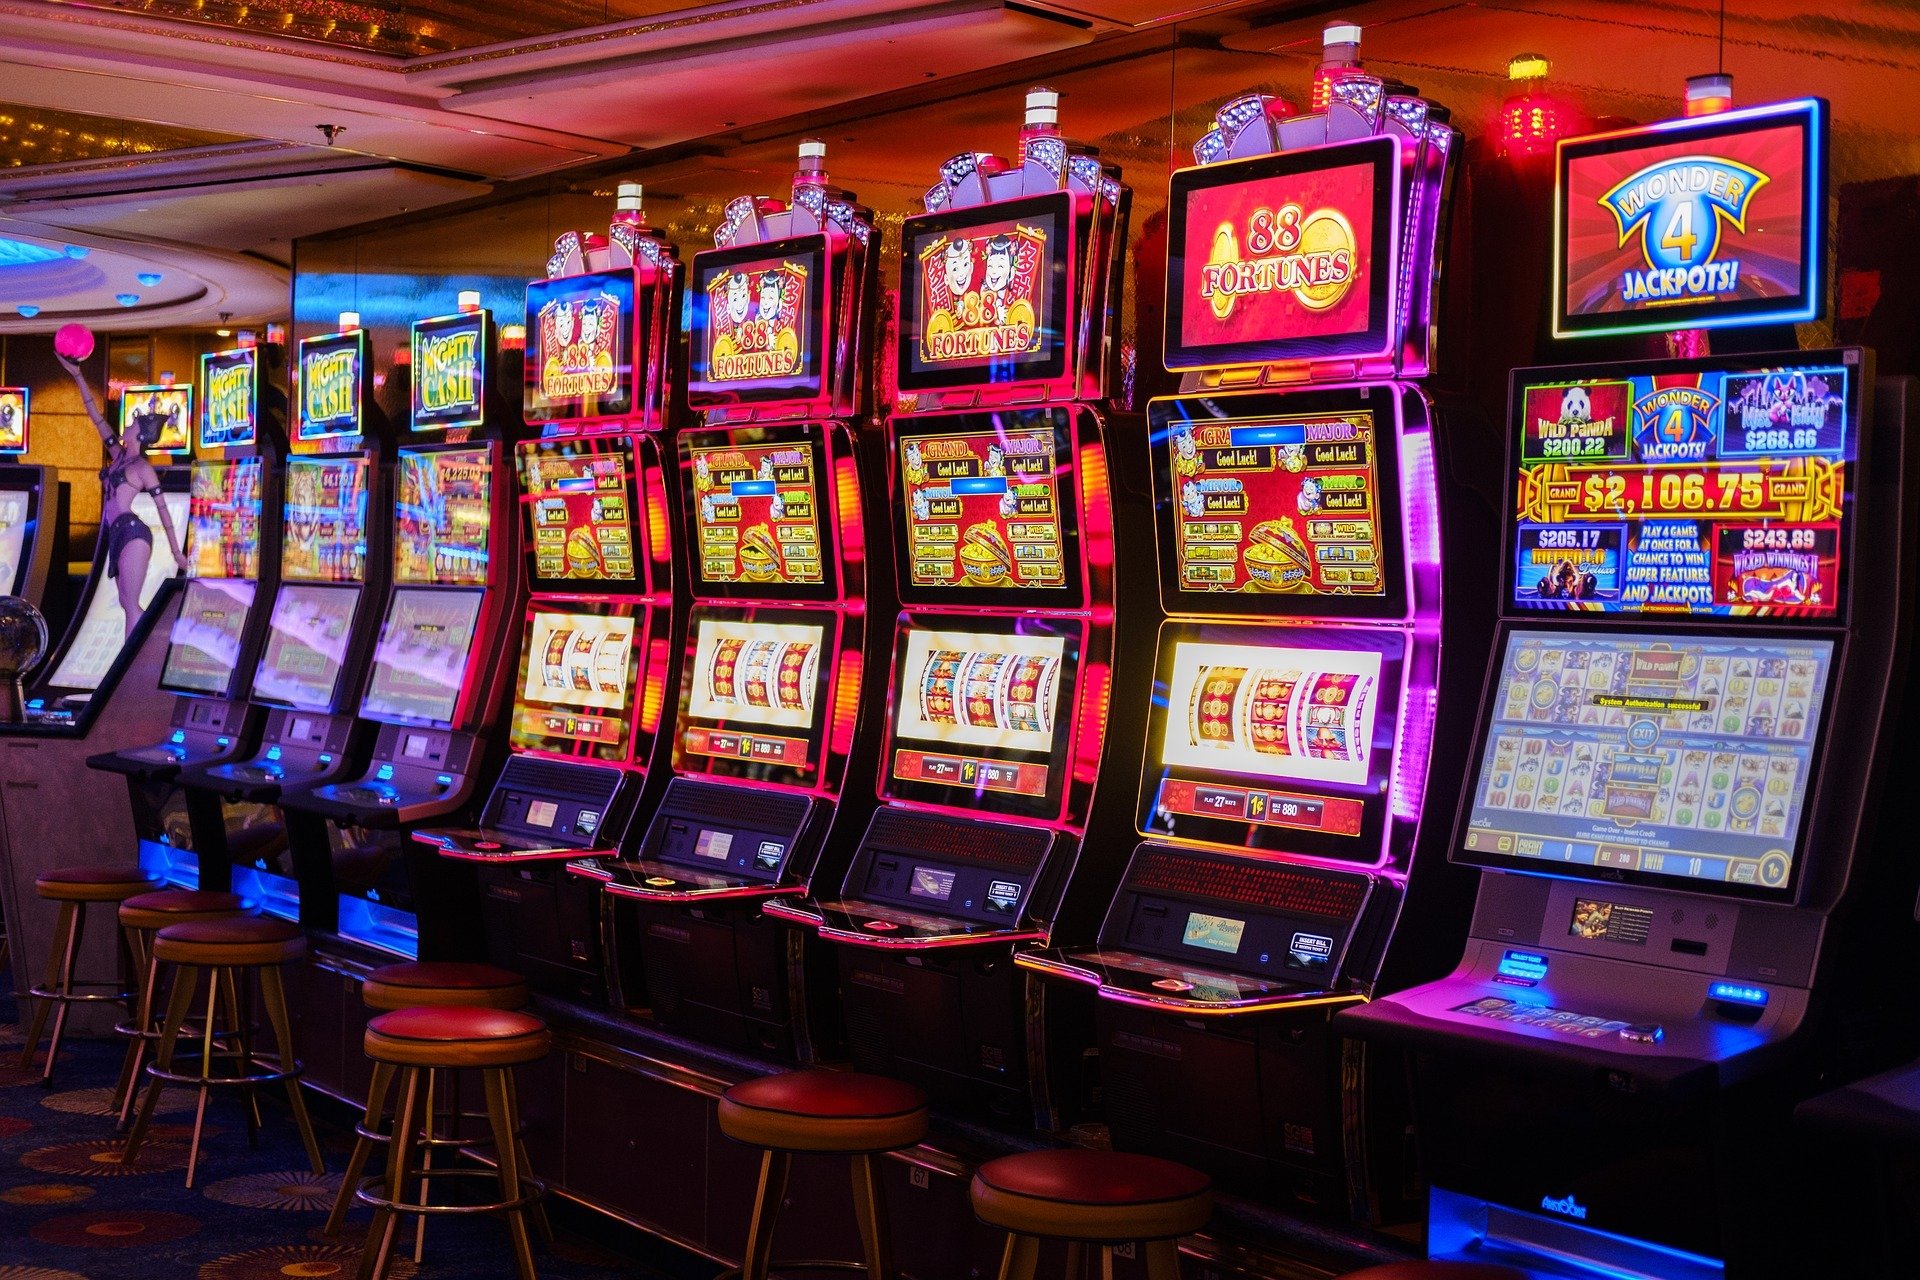 Are casino slot machines rigged